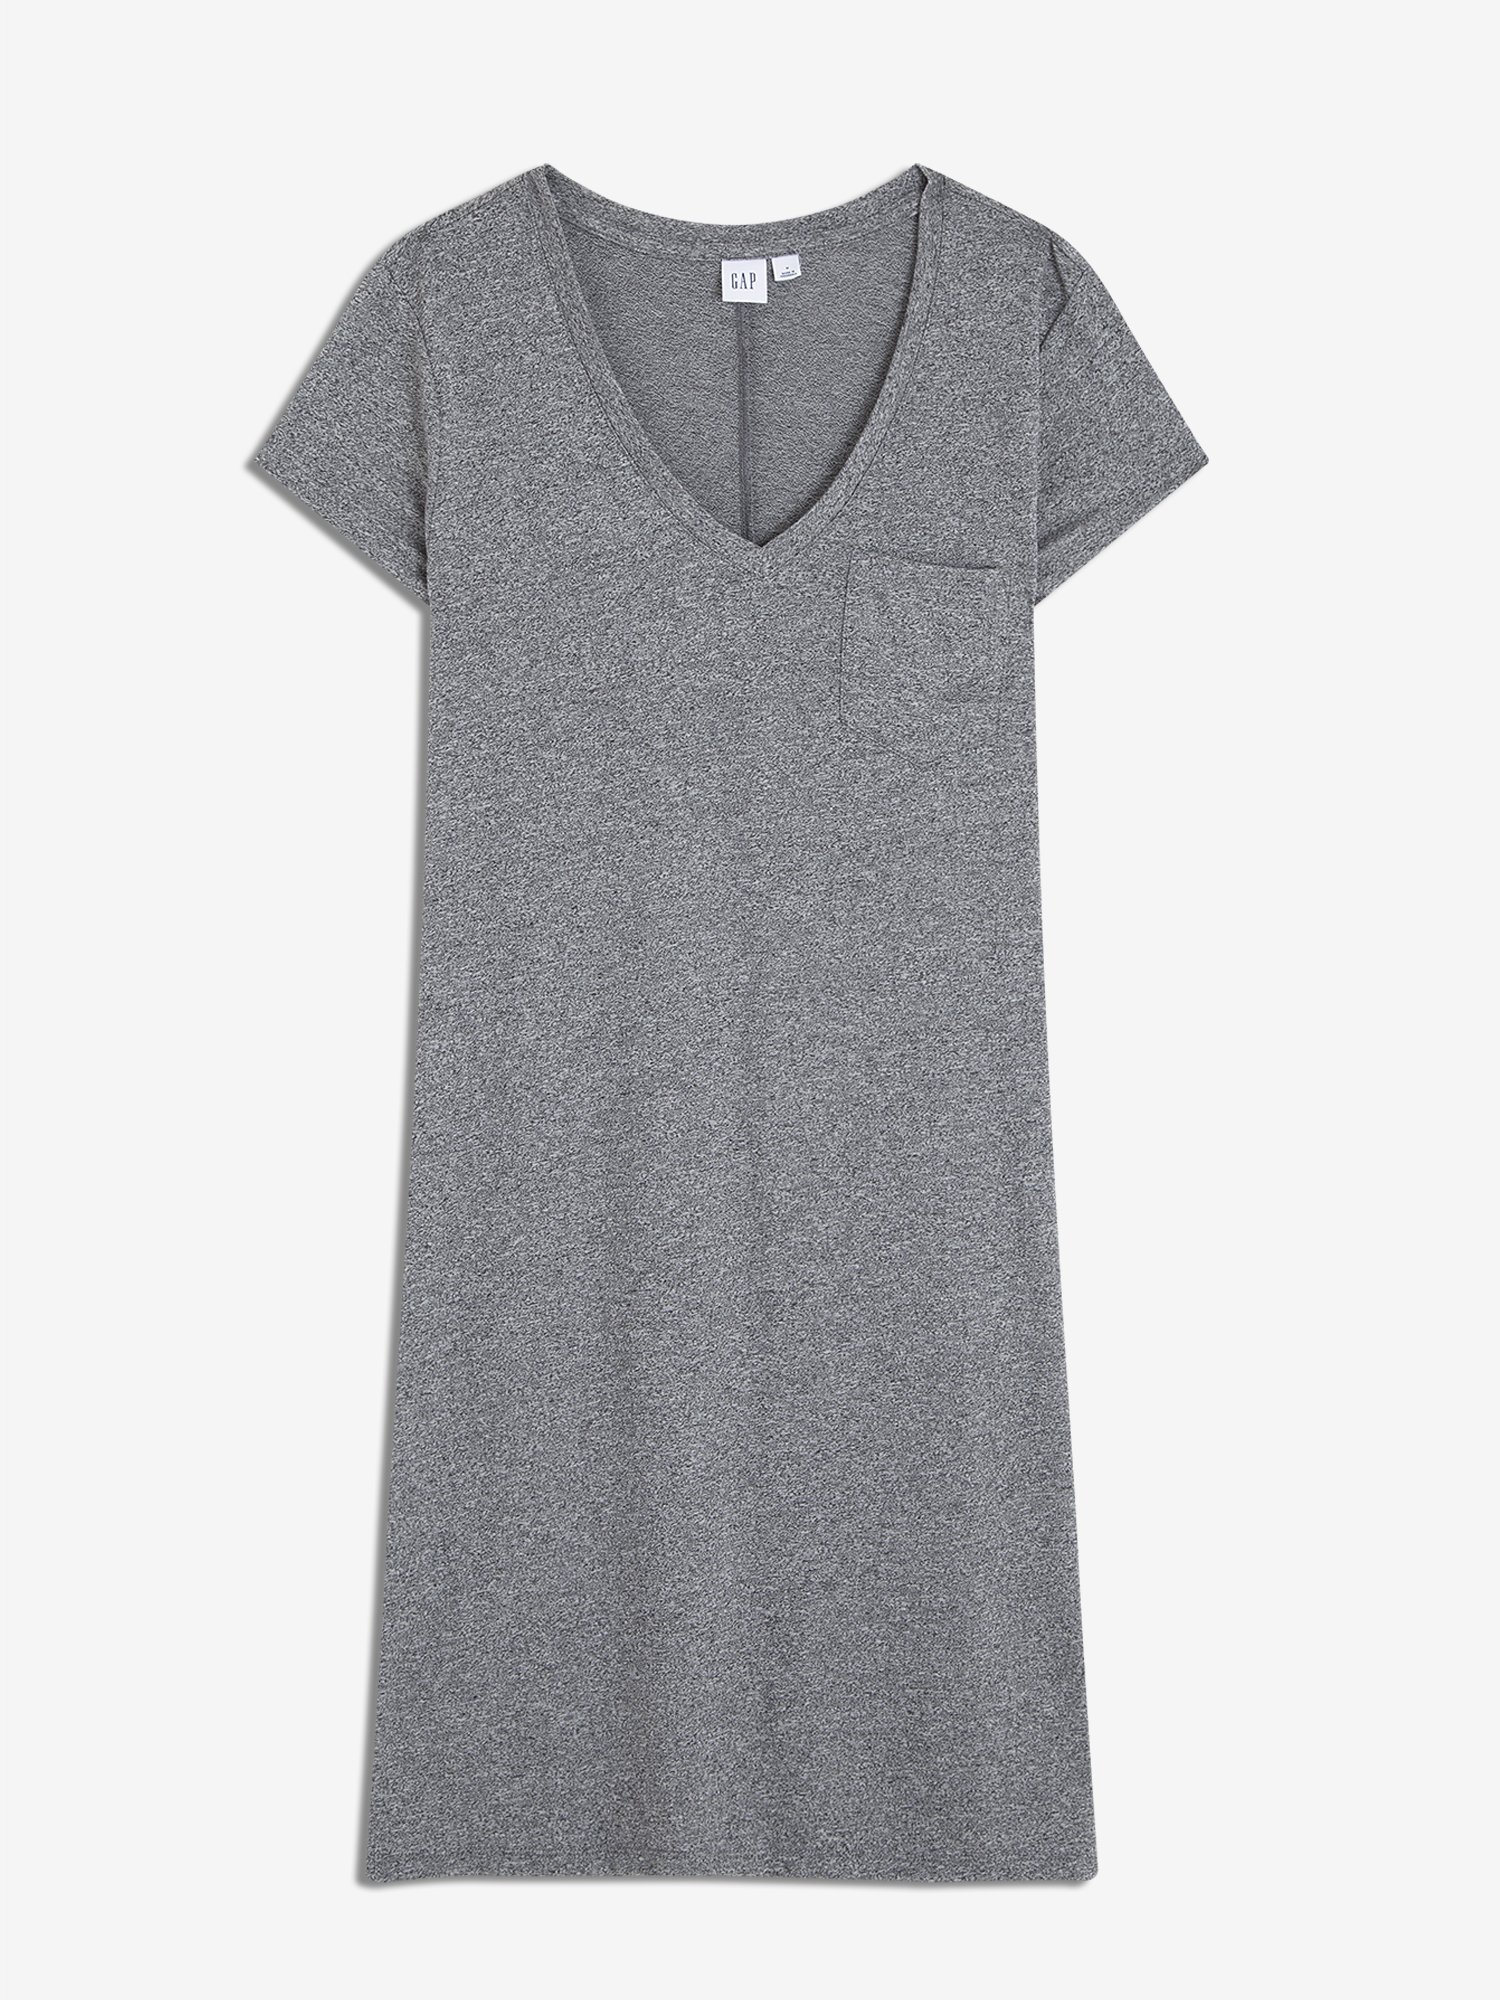 Kadın V-Yaka Cepli T-Shirt Elbise product image